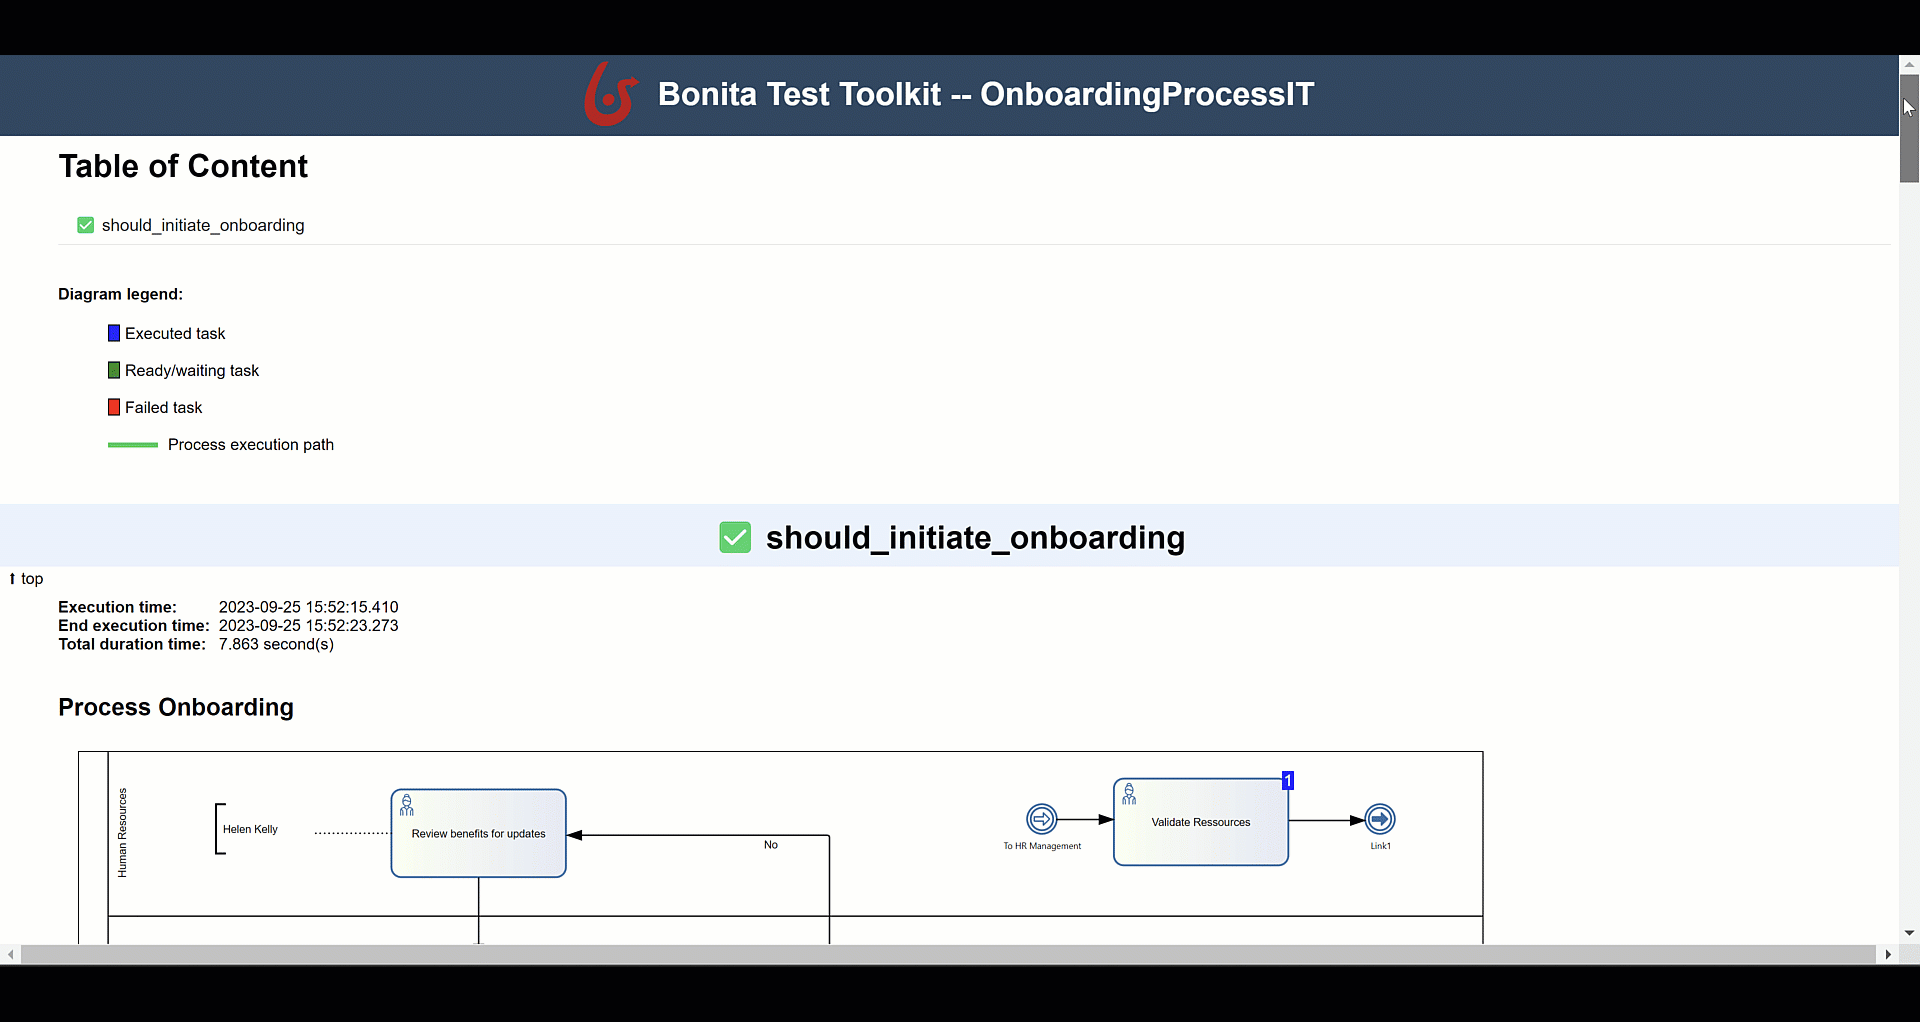 Generated test report using Bonita Test Toolkit